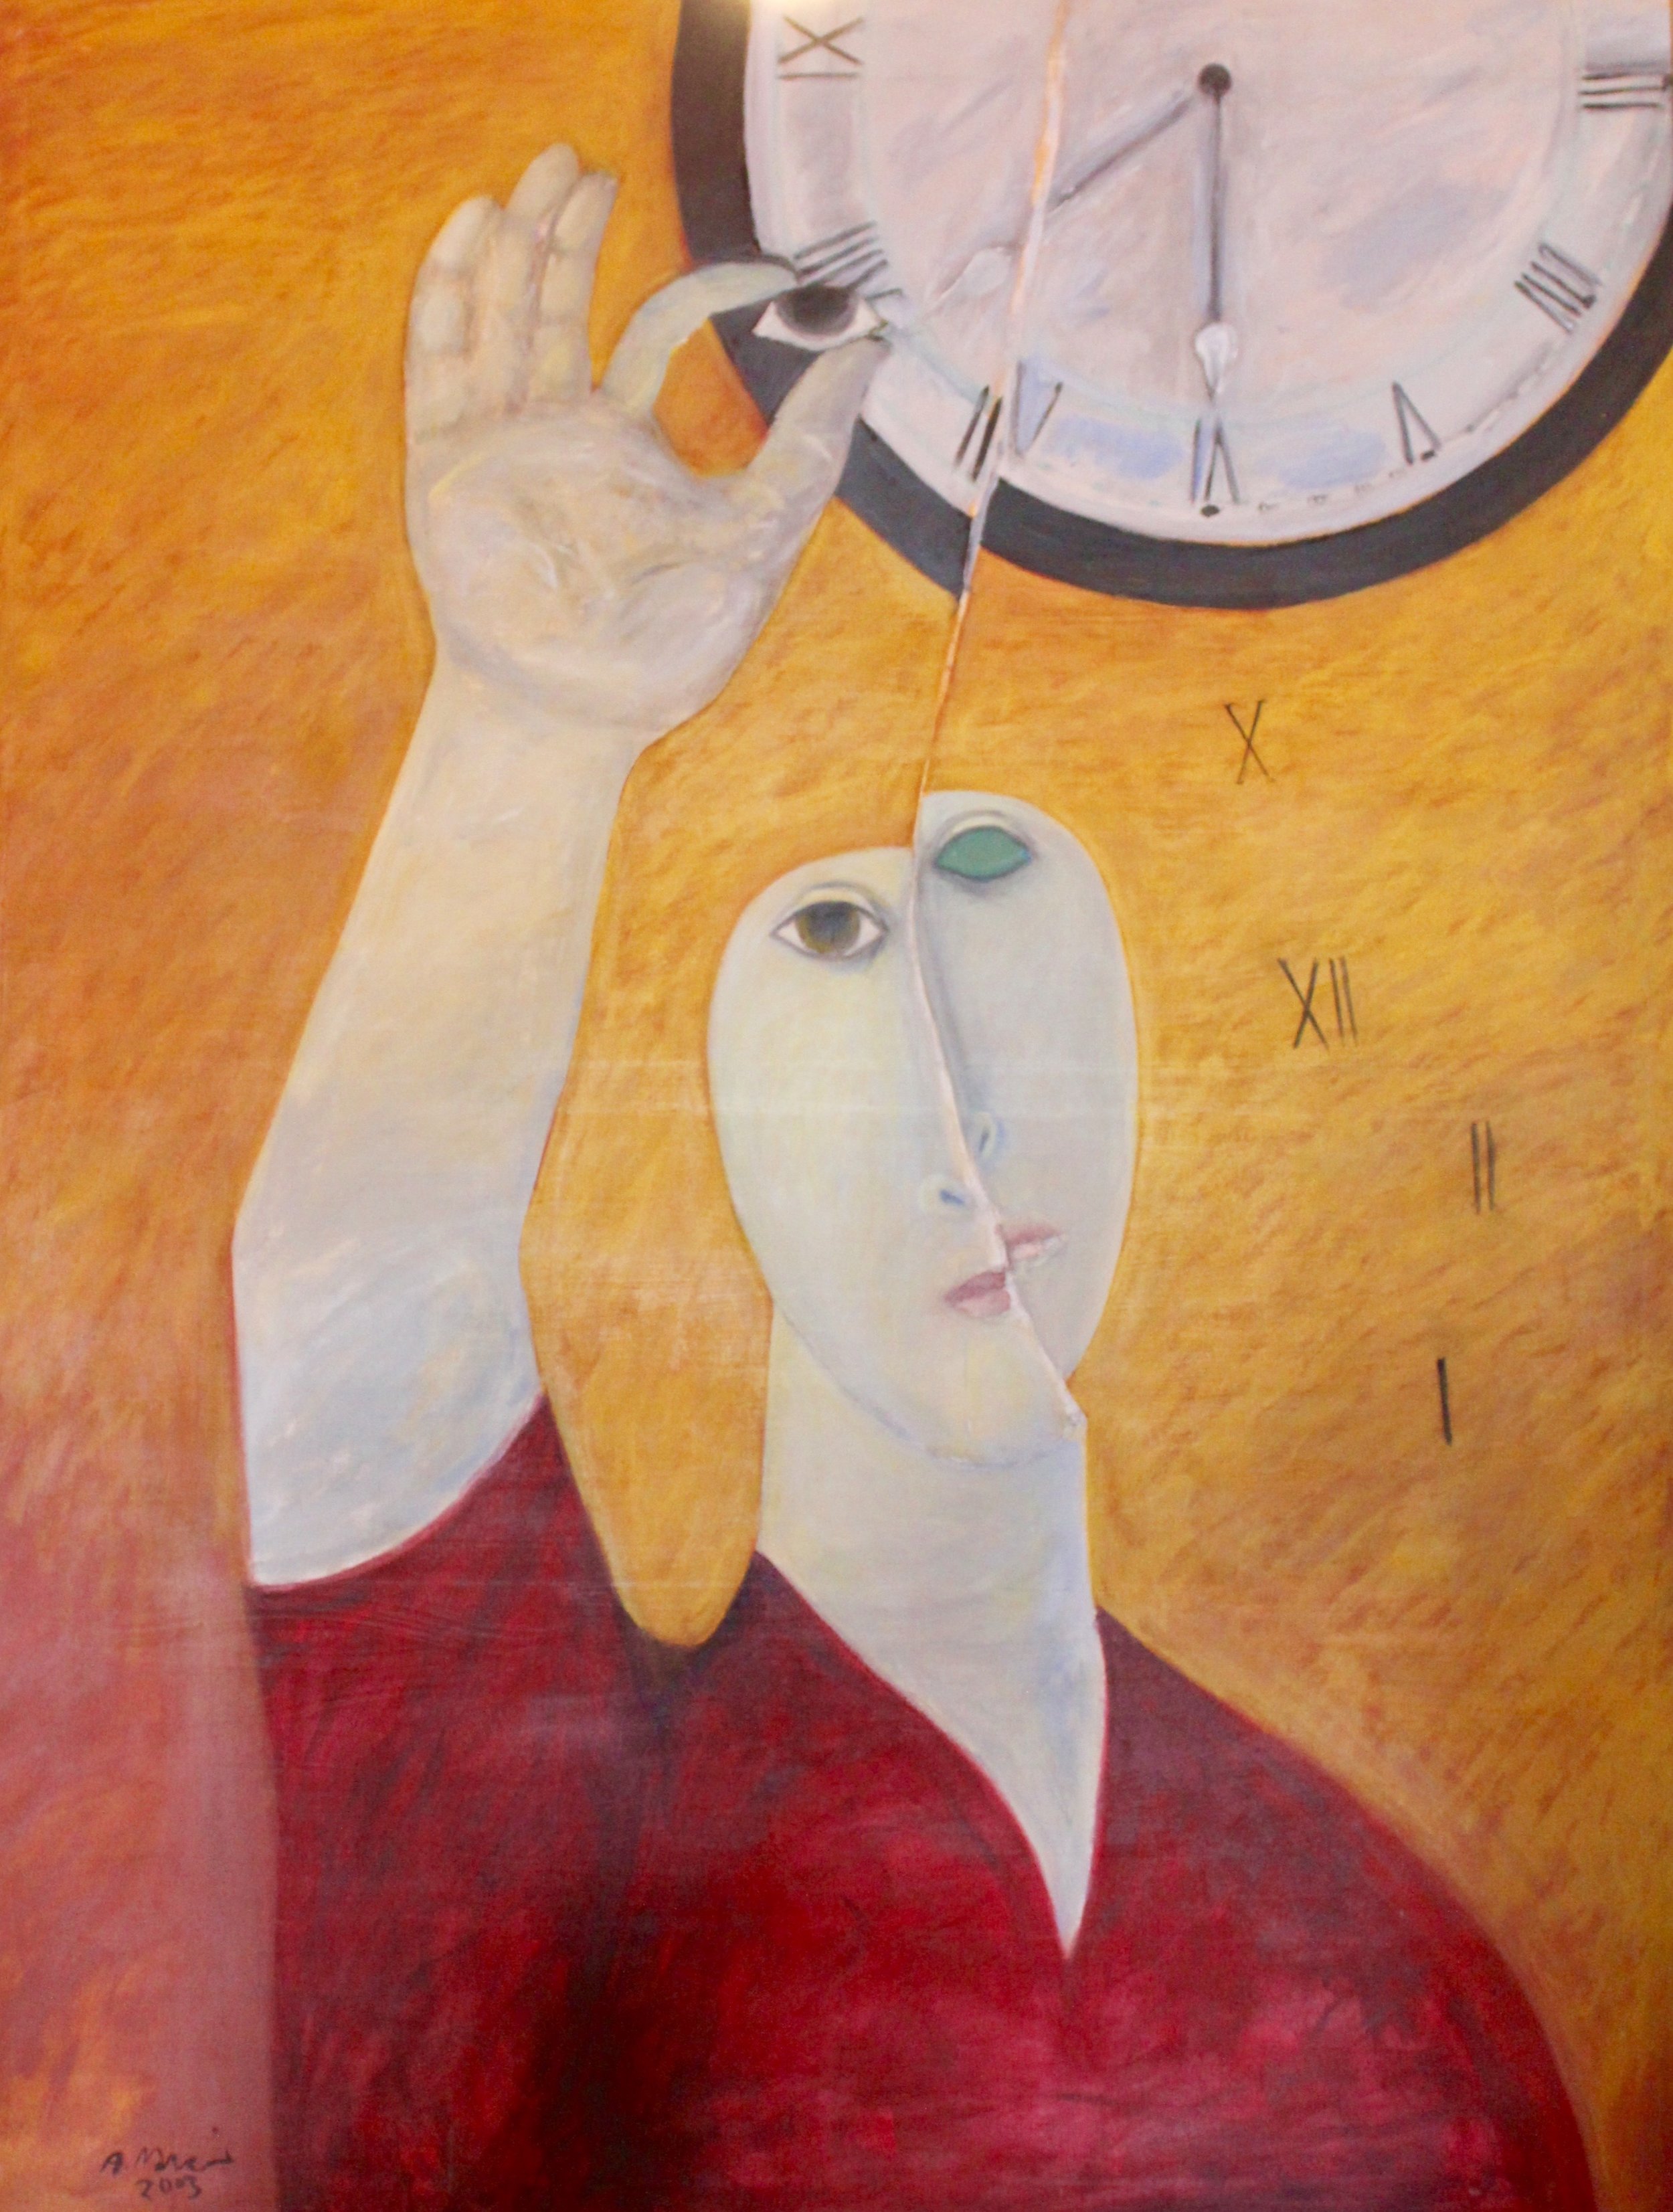  Eyeing Time, 2000, Acrylic on canvas, 199 x 154 cm  